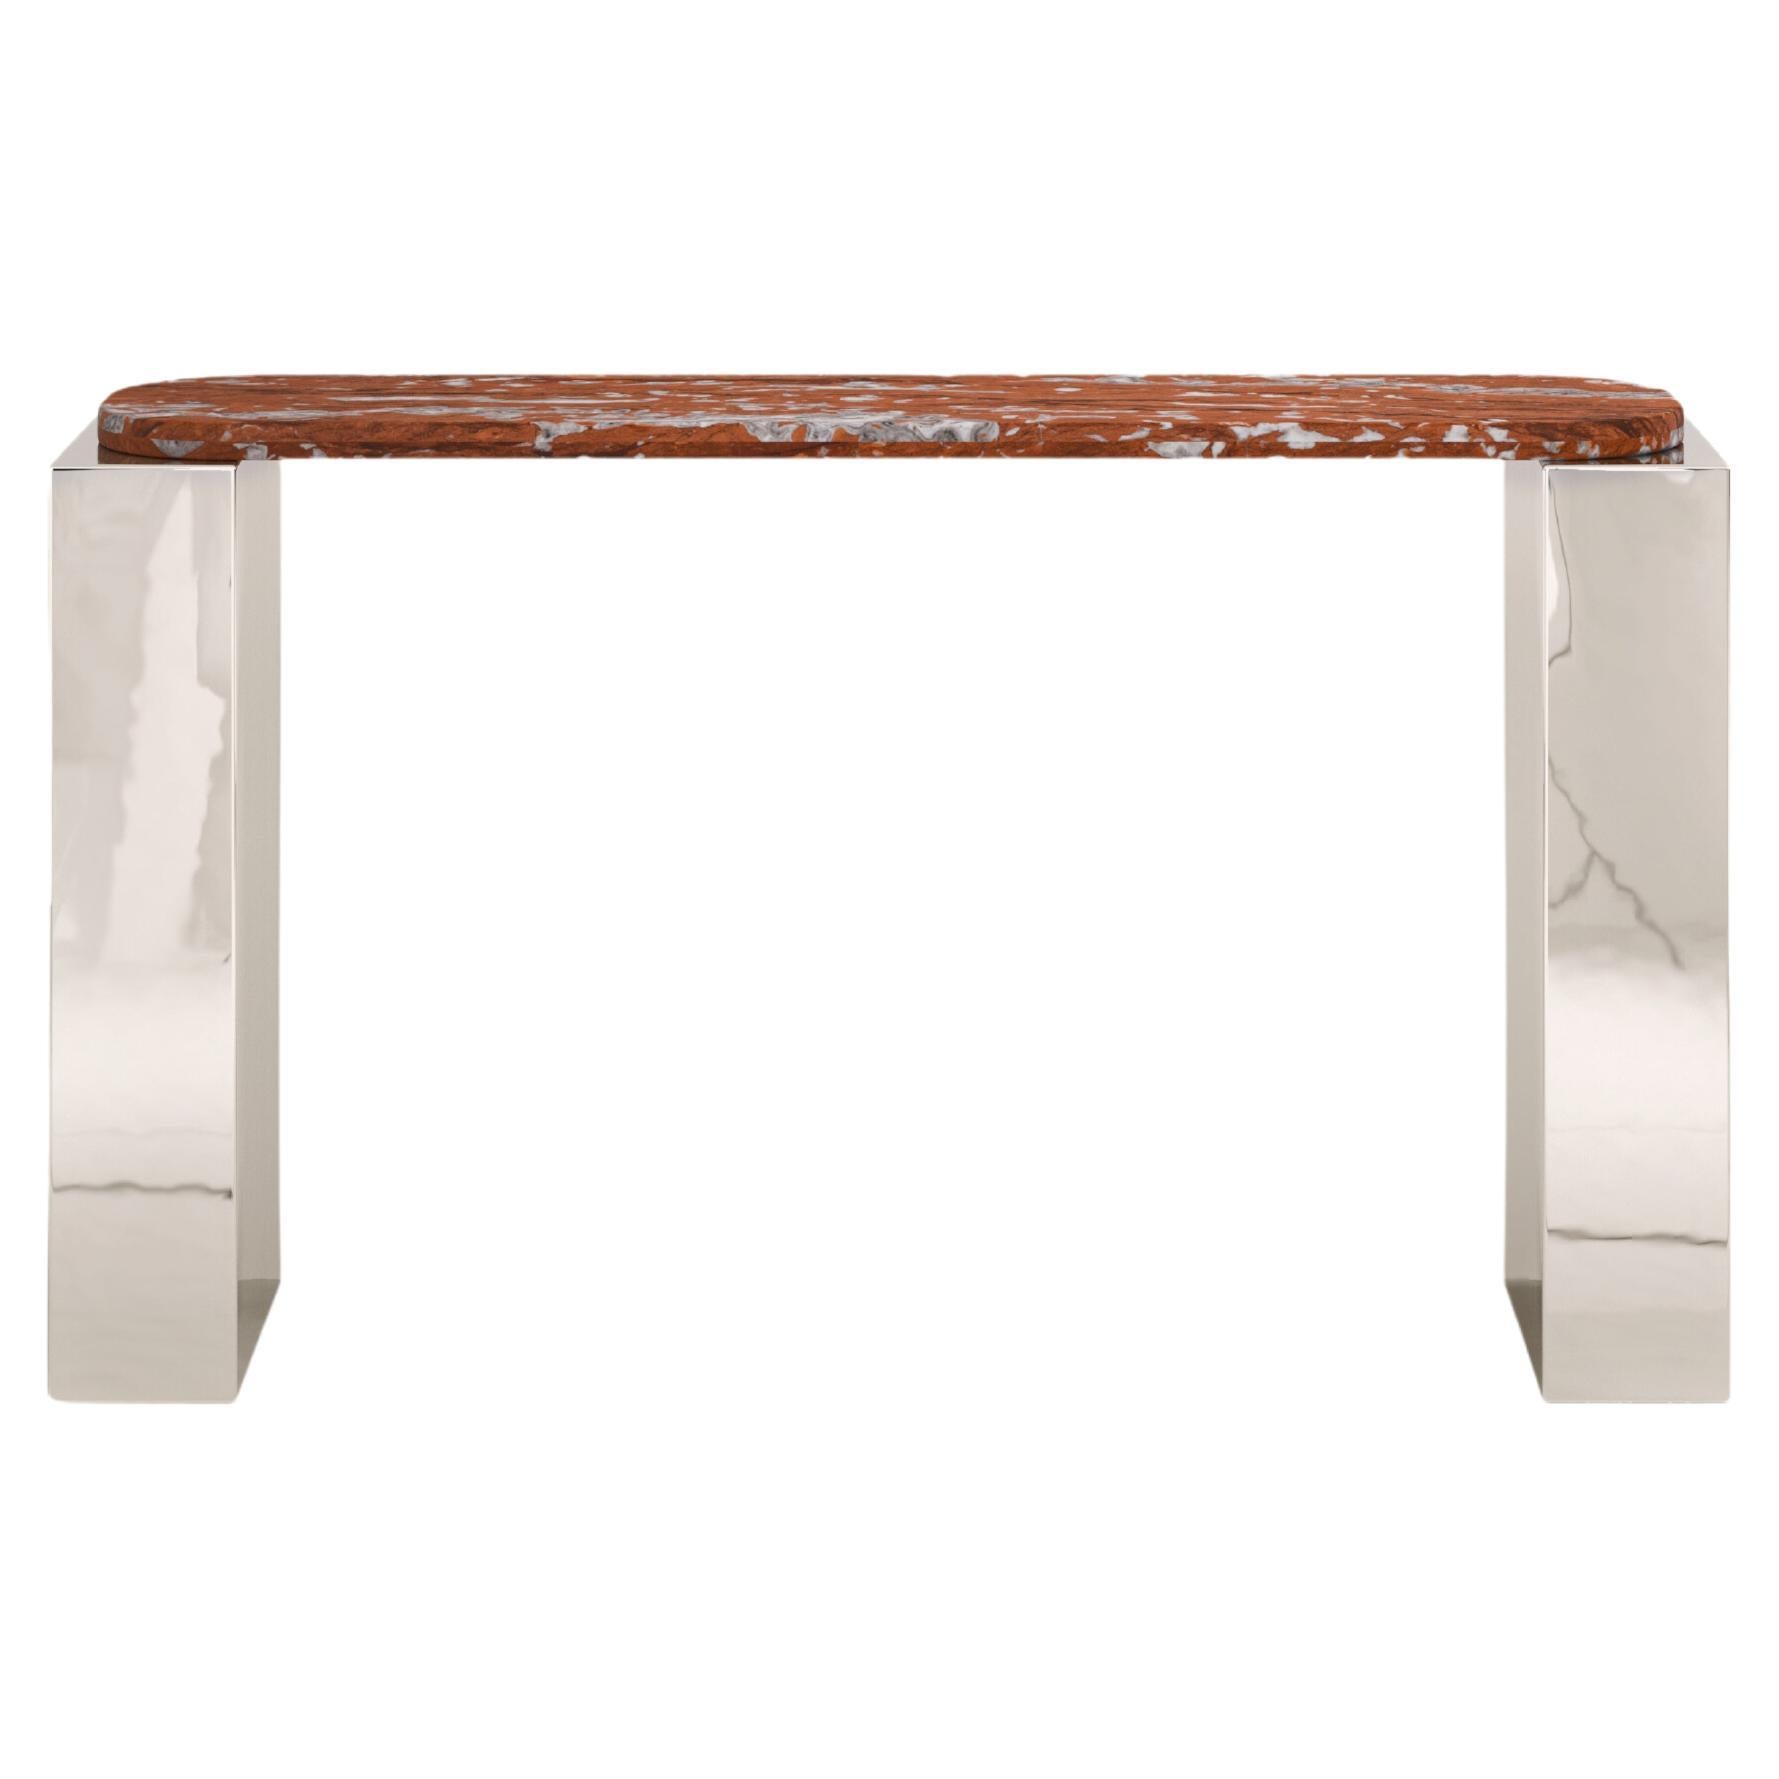 FORM(LA) Cubo Console Table 62”L x 17”W x 36”H Rosso Francia Marble & Chrome For Sale